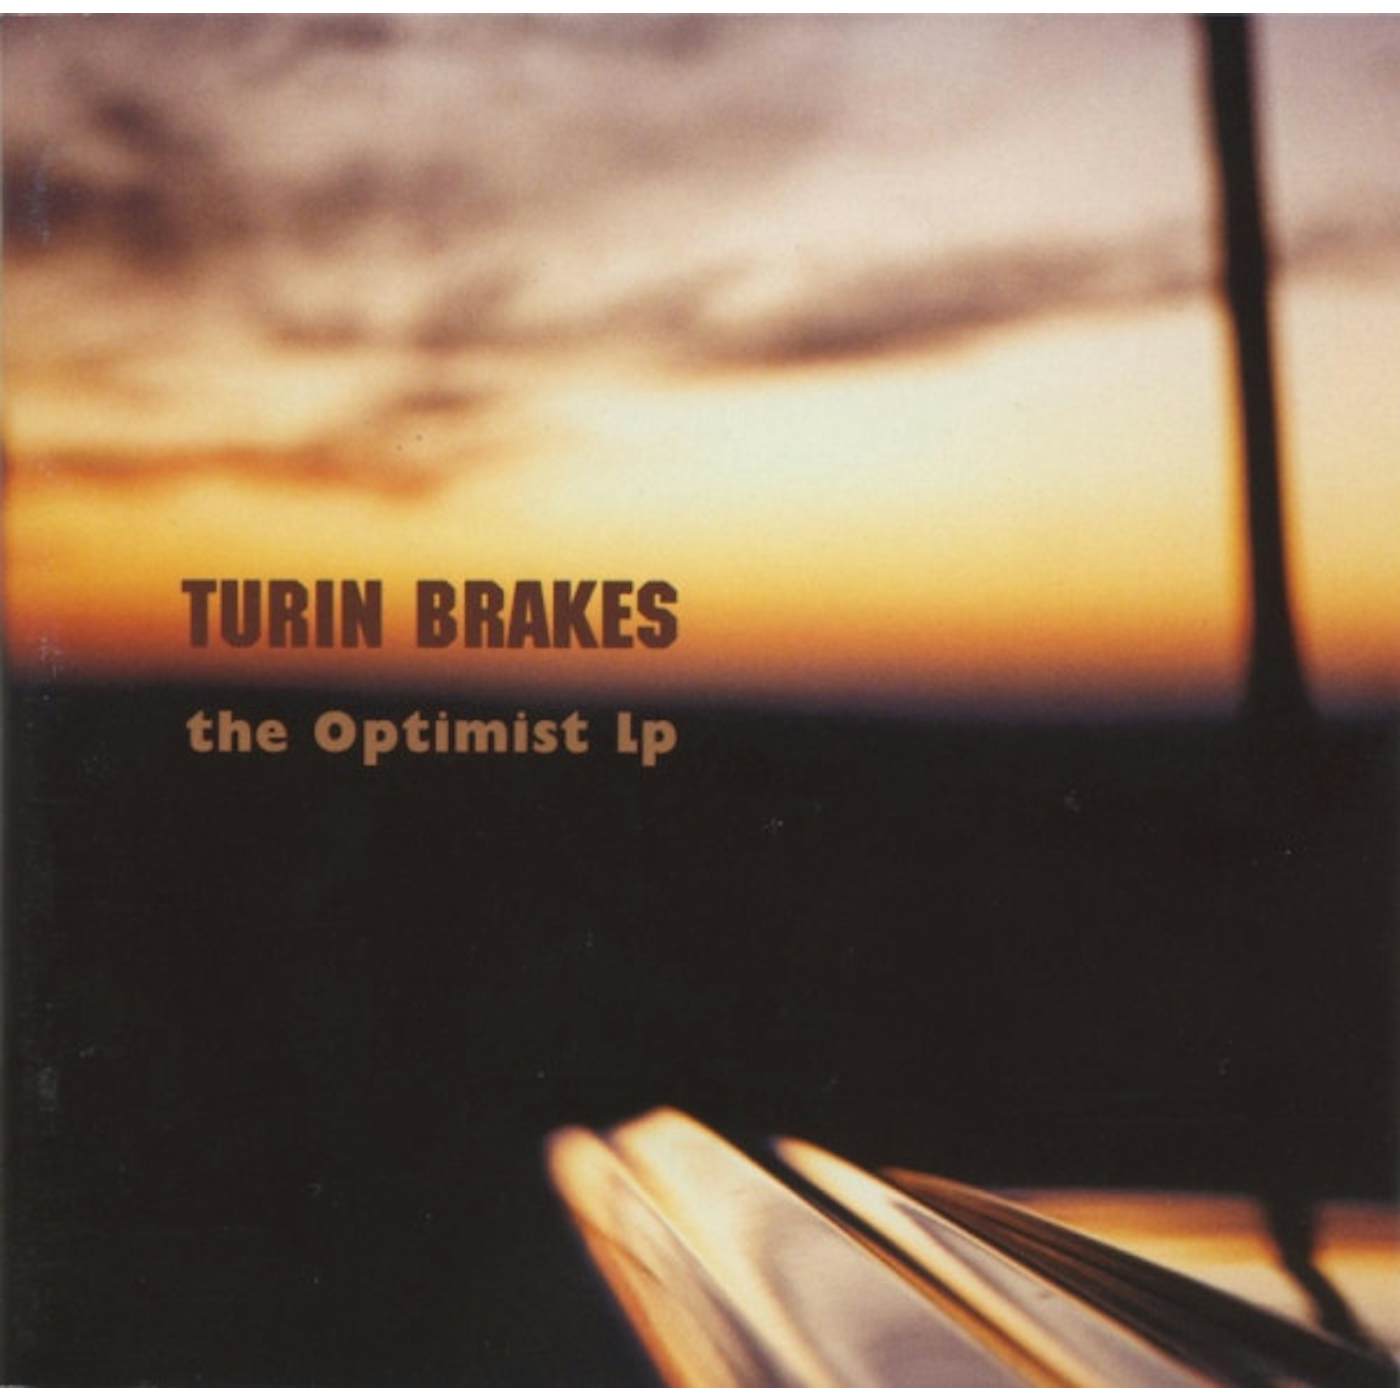 Turin Brakes OPTIMIST Vinyl Record